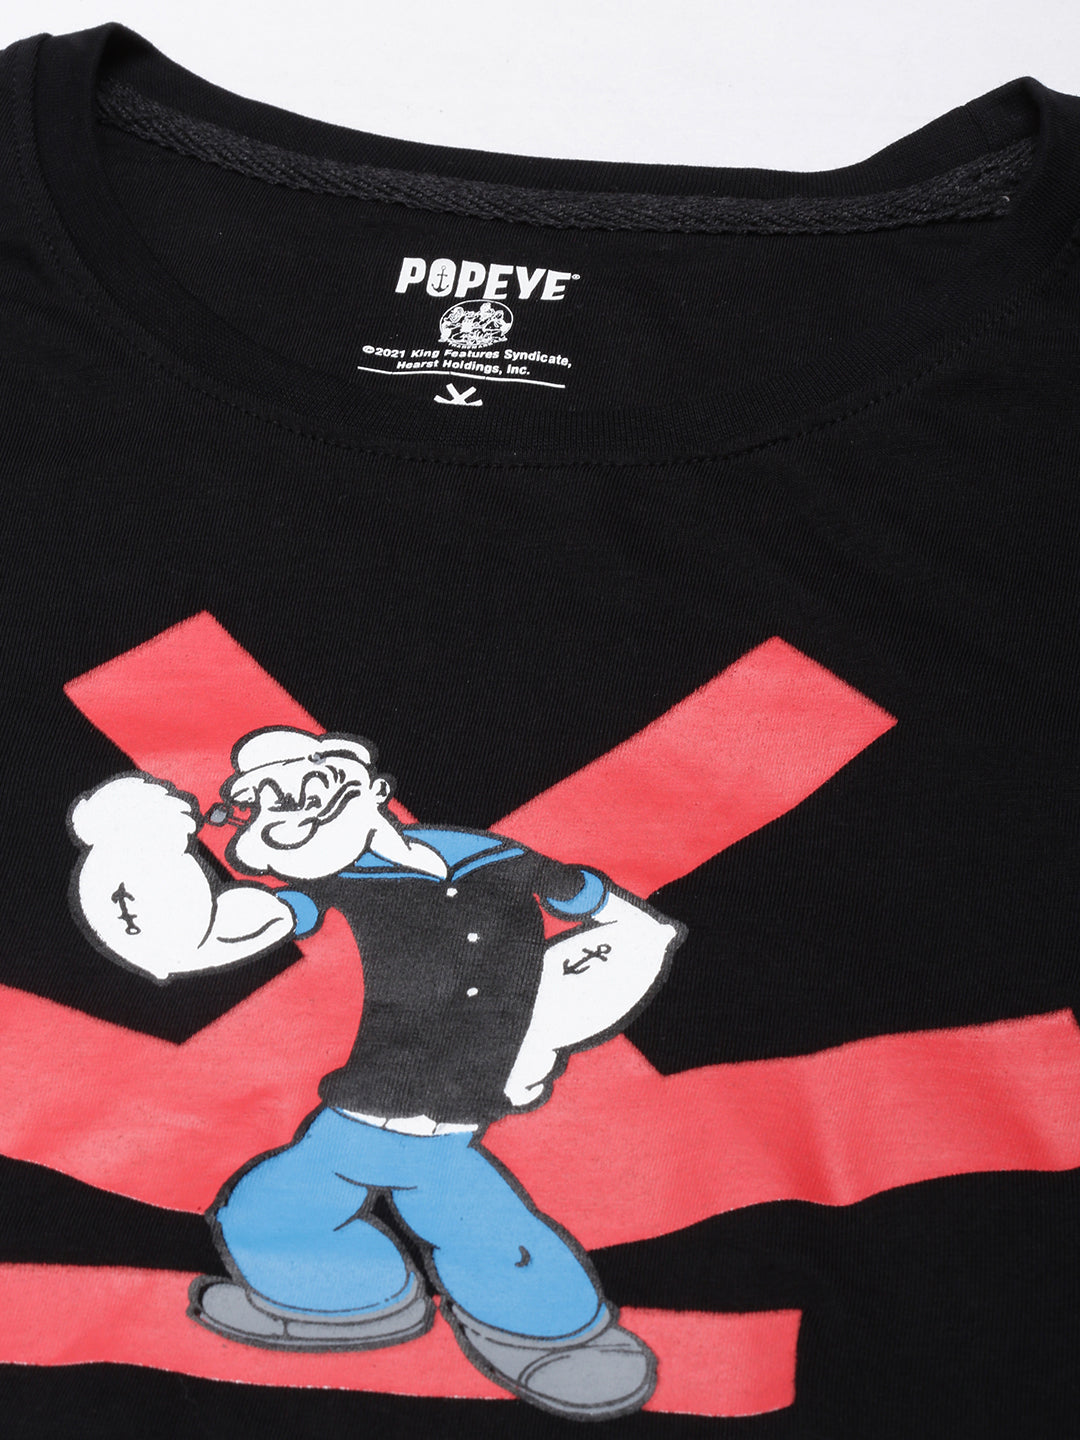 Popeye Printed Black T-Shirt